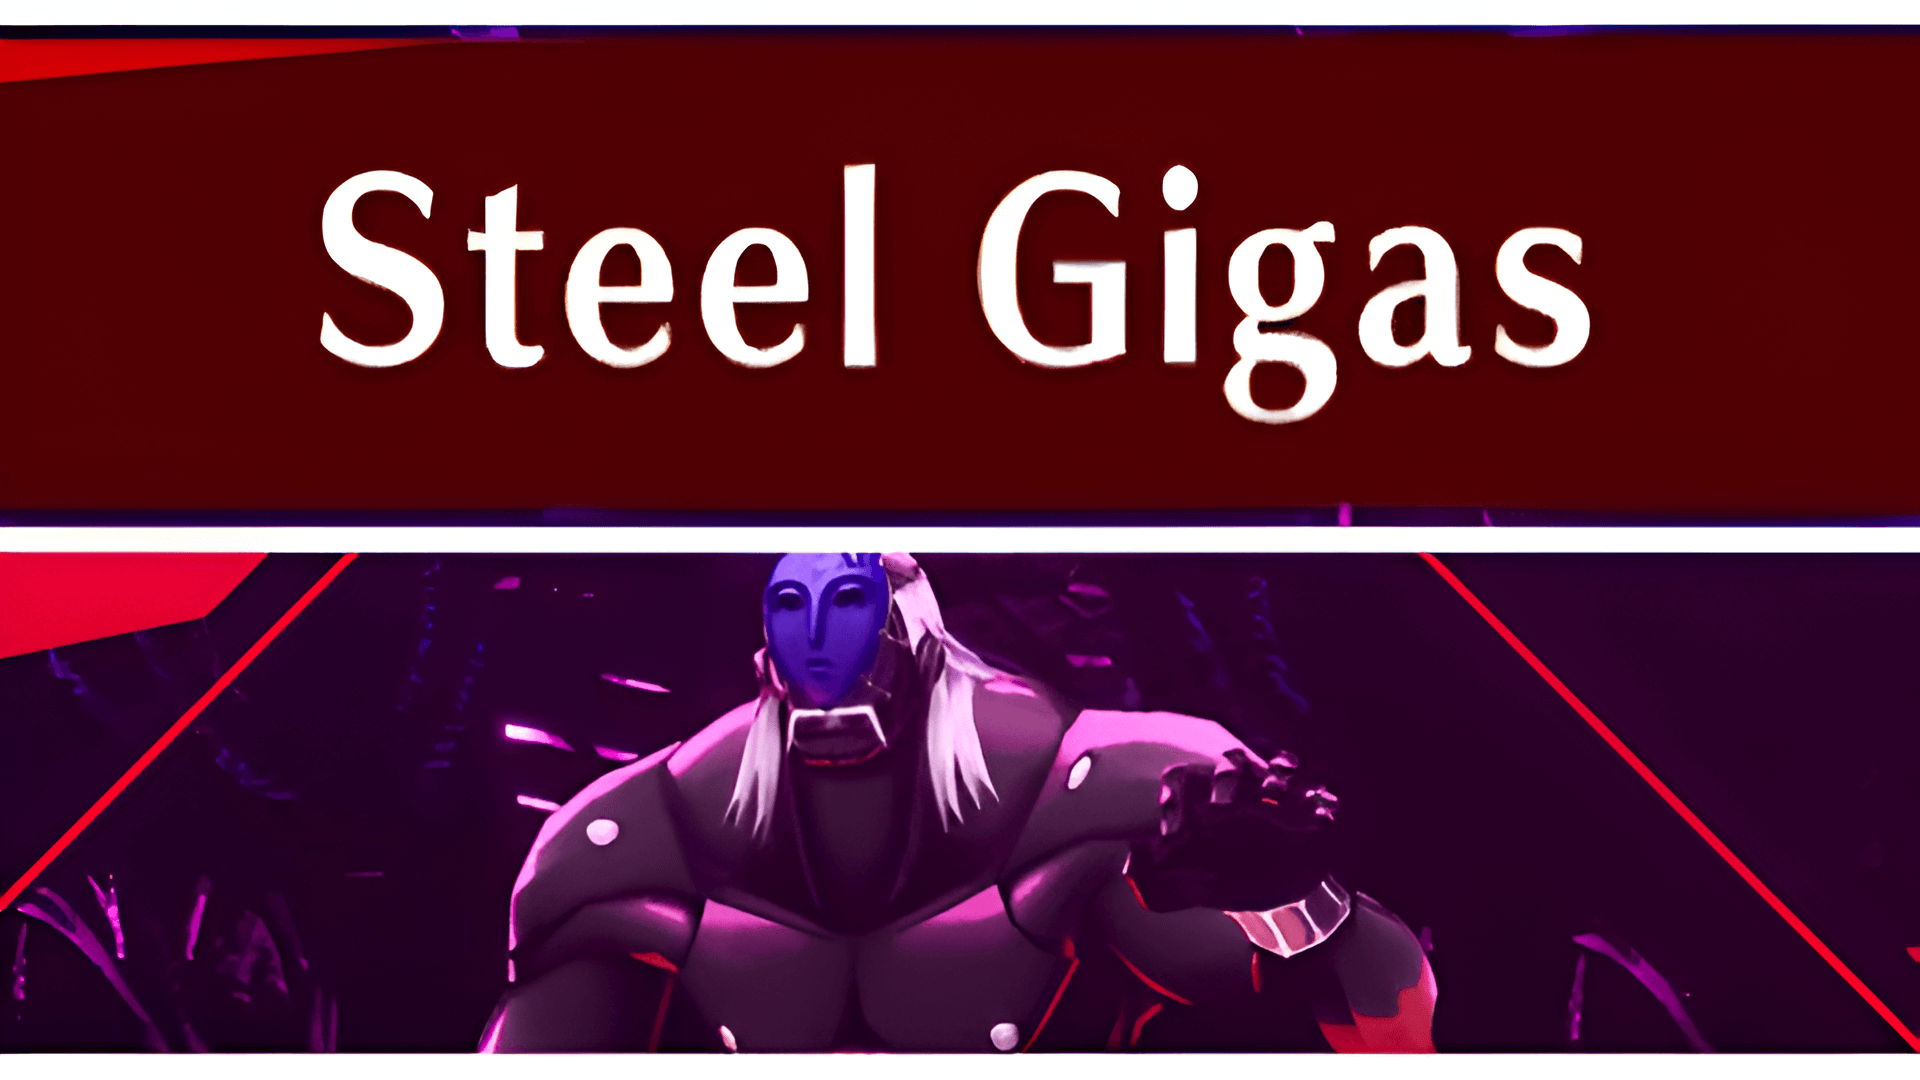 p3r-steel-gigas-weakness-featured (1) (1)